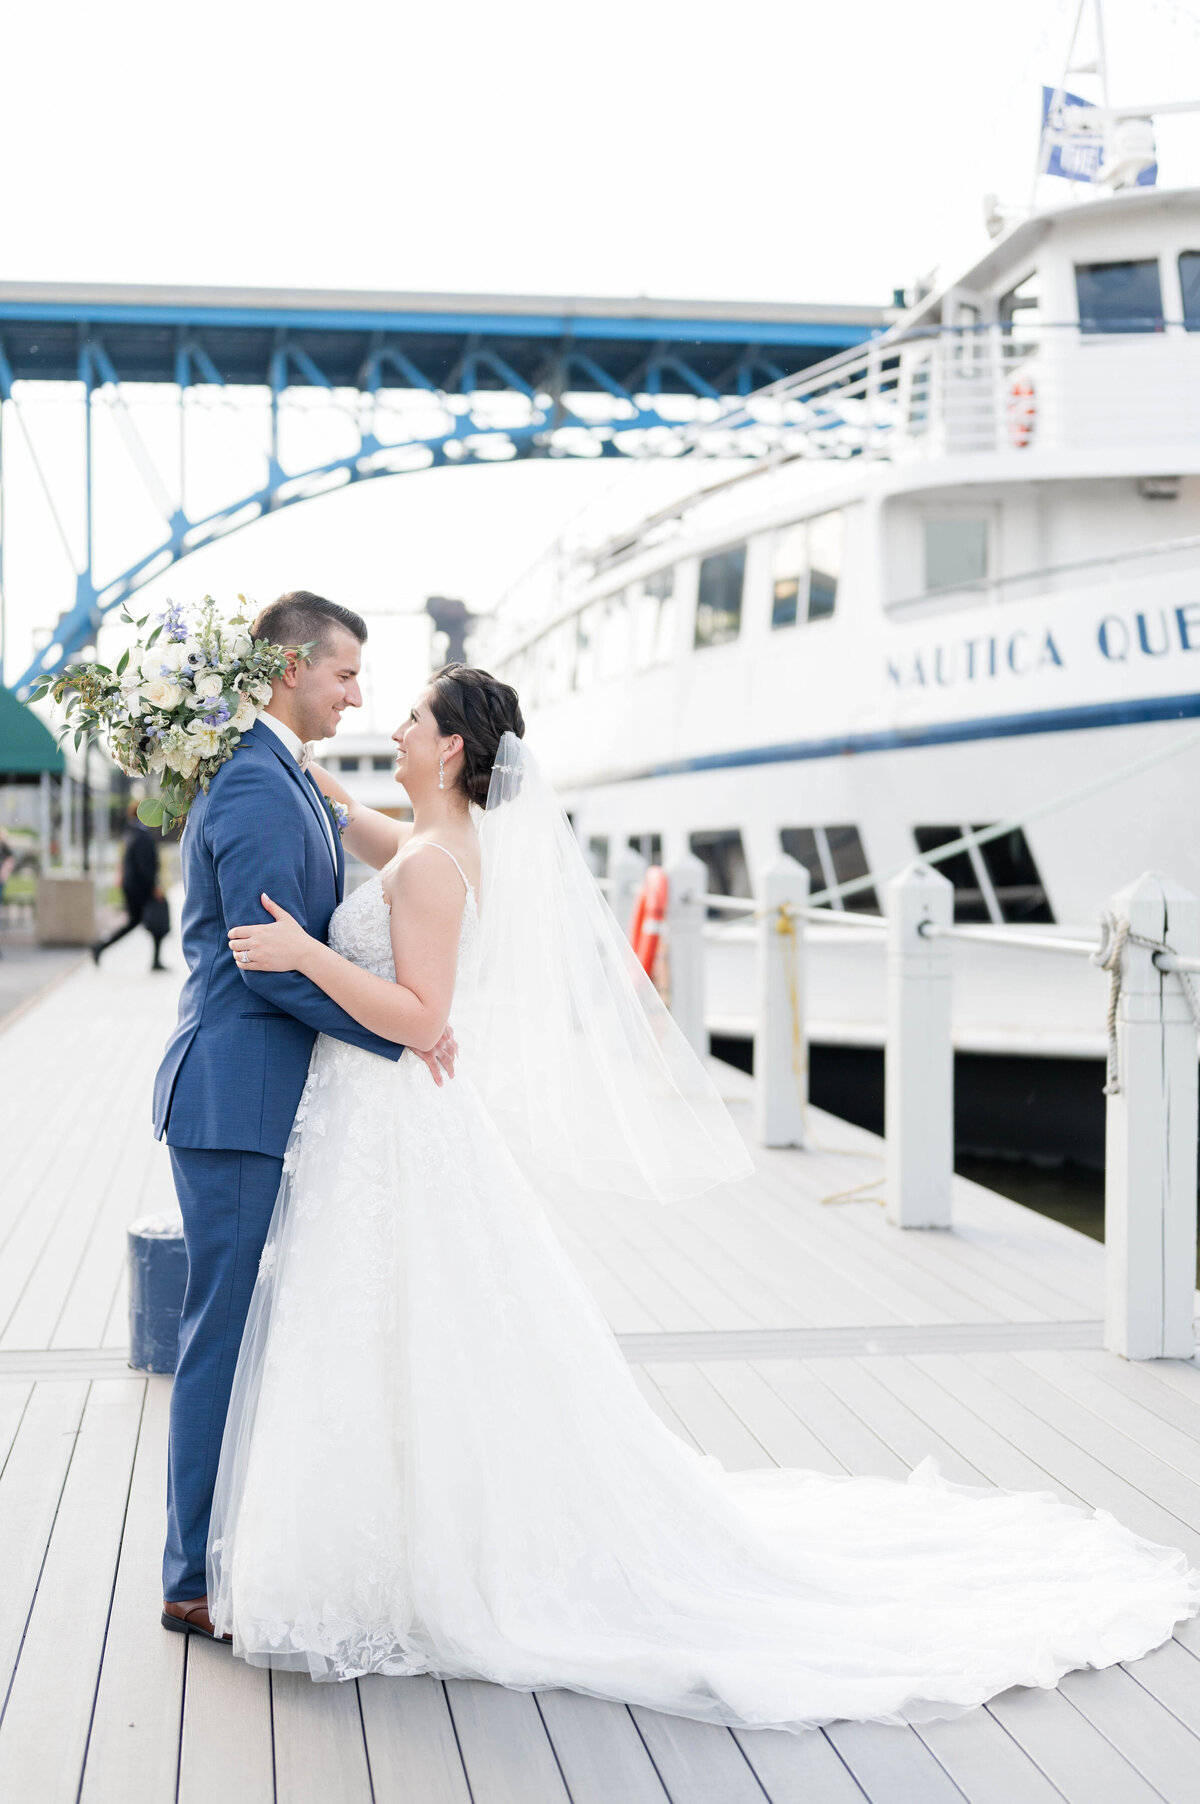 The Nautica Queen Wedding Photography